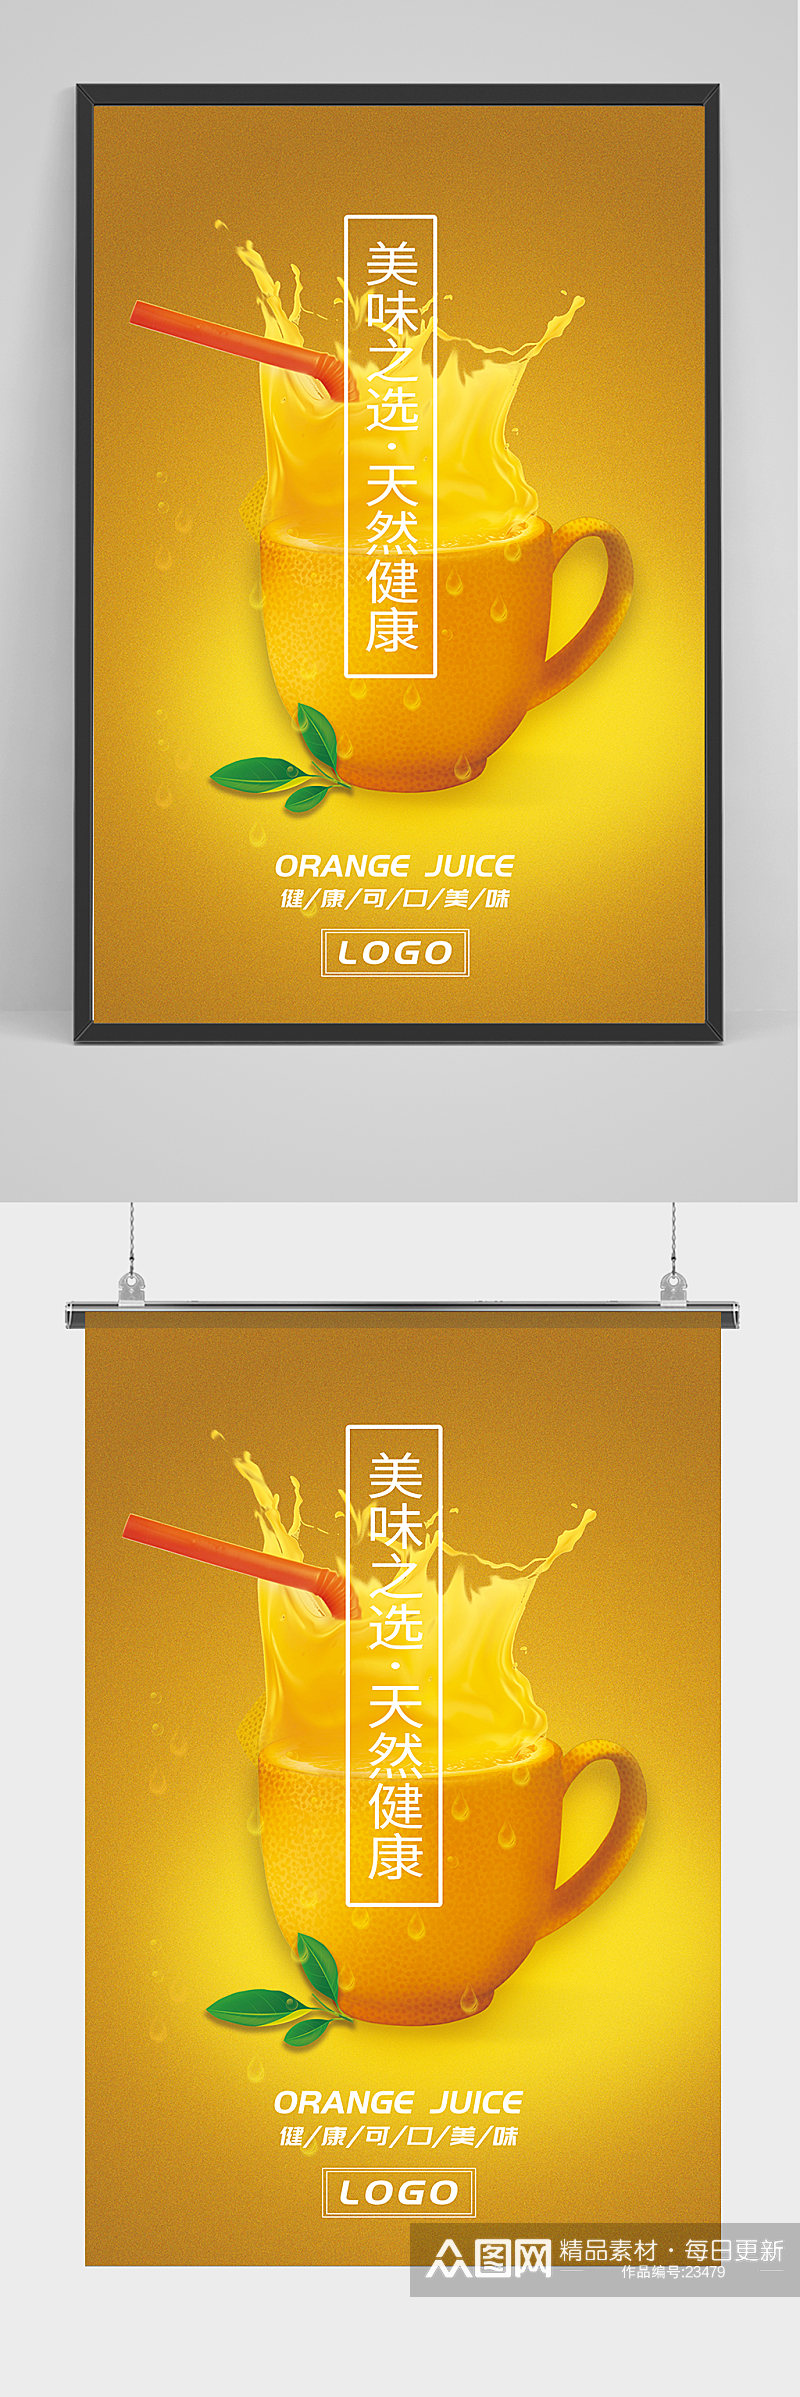 PS橙汁合成海报素材